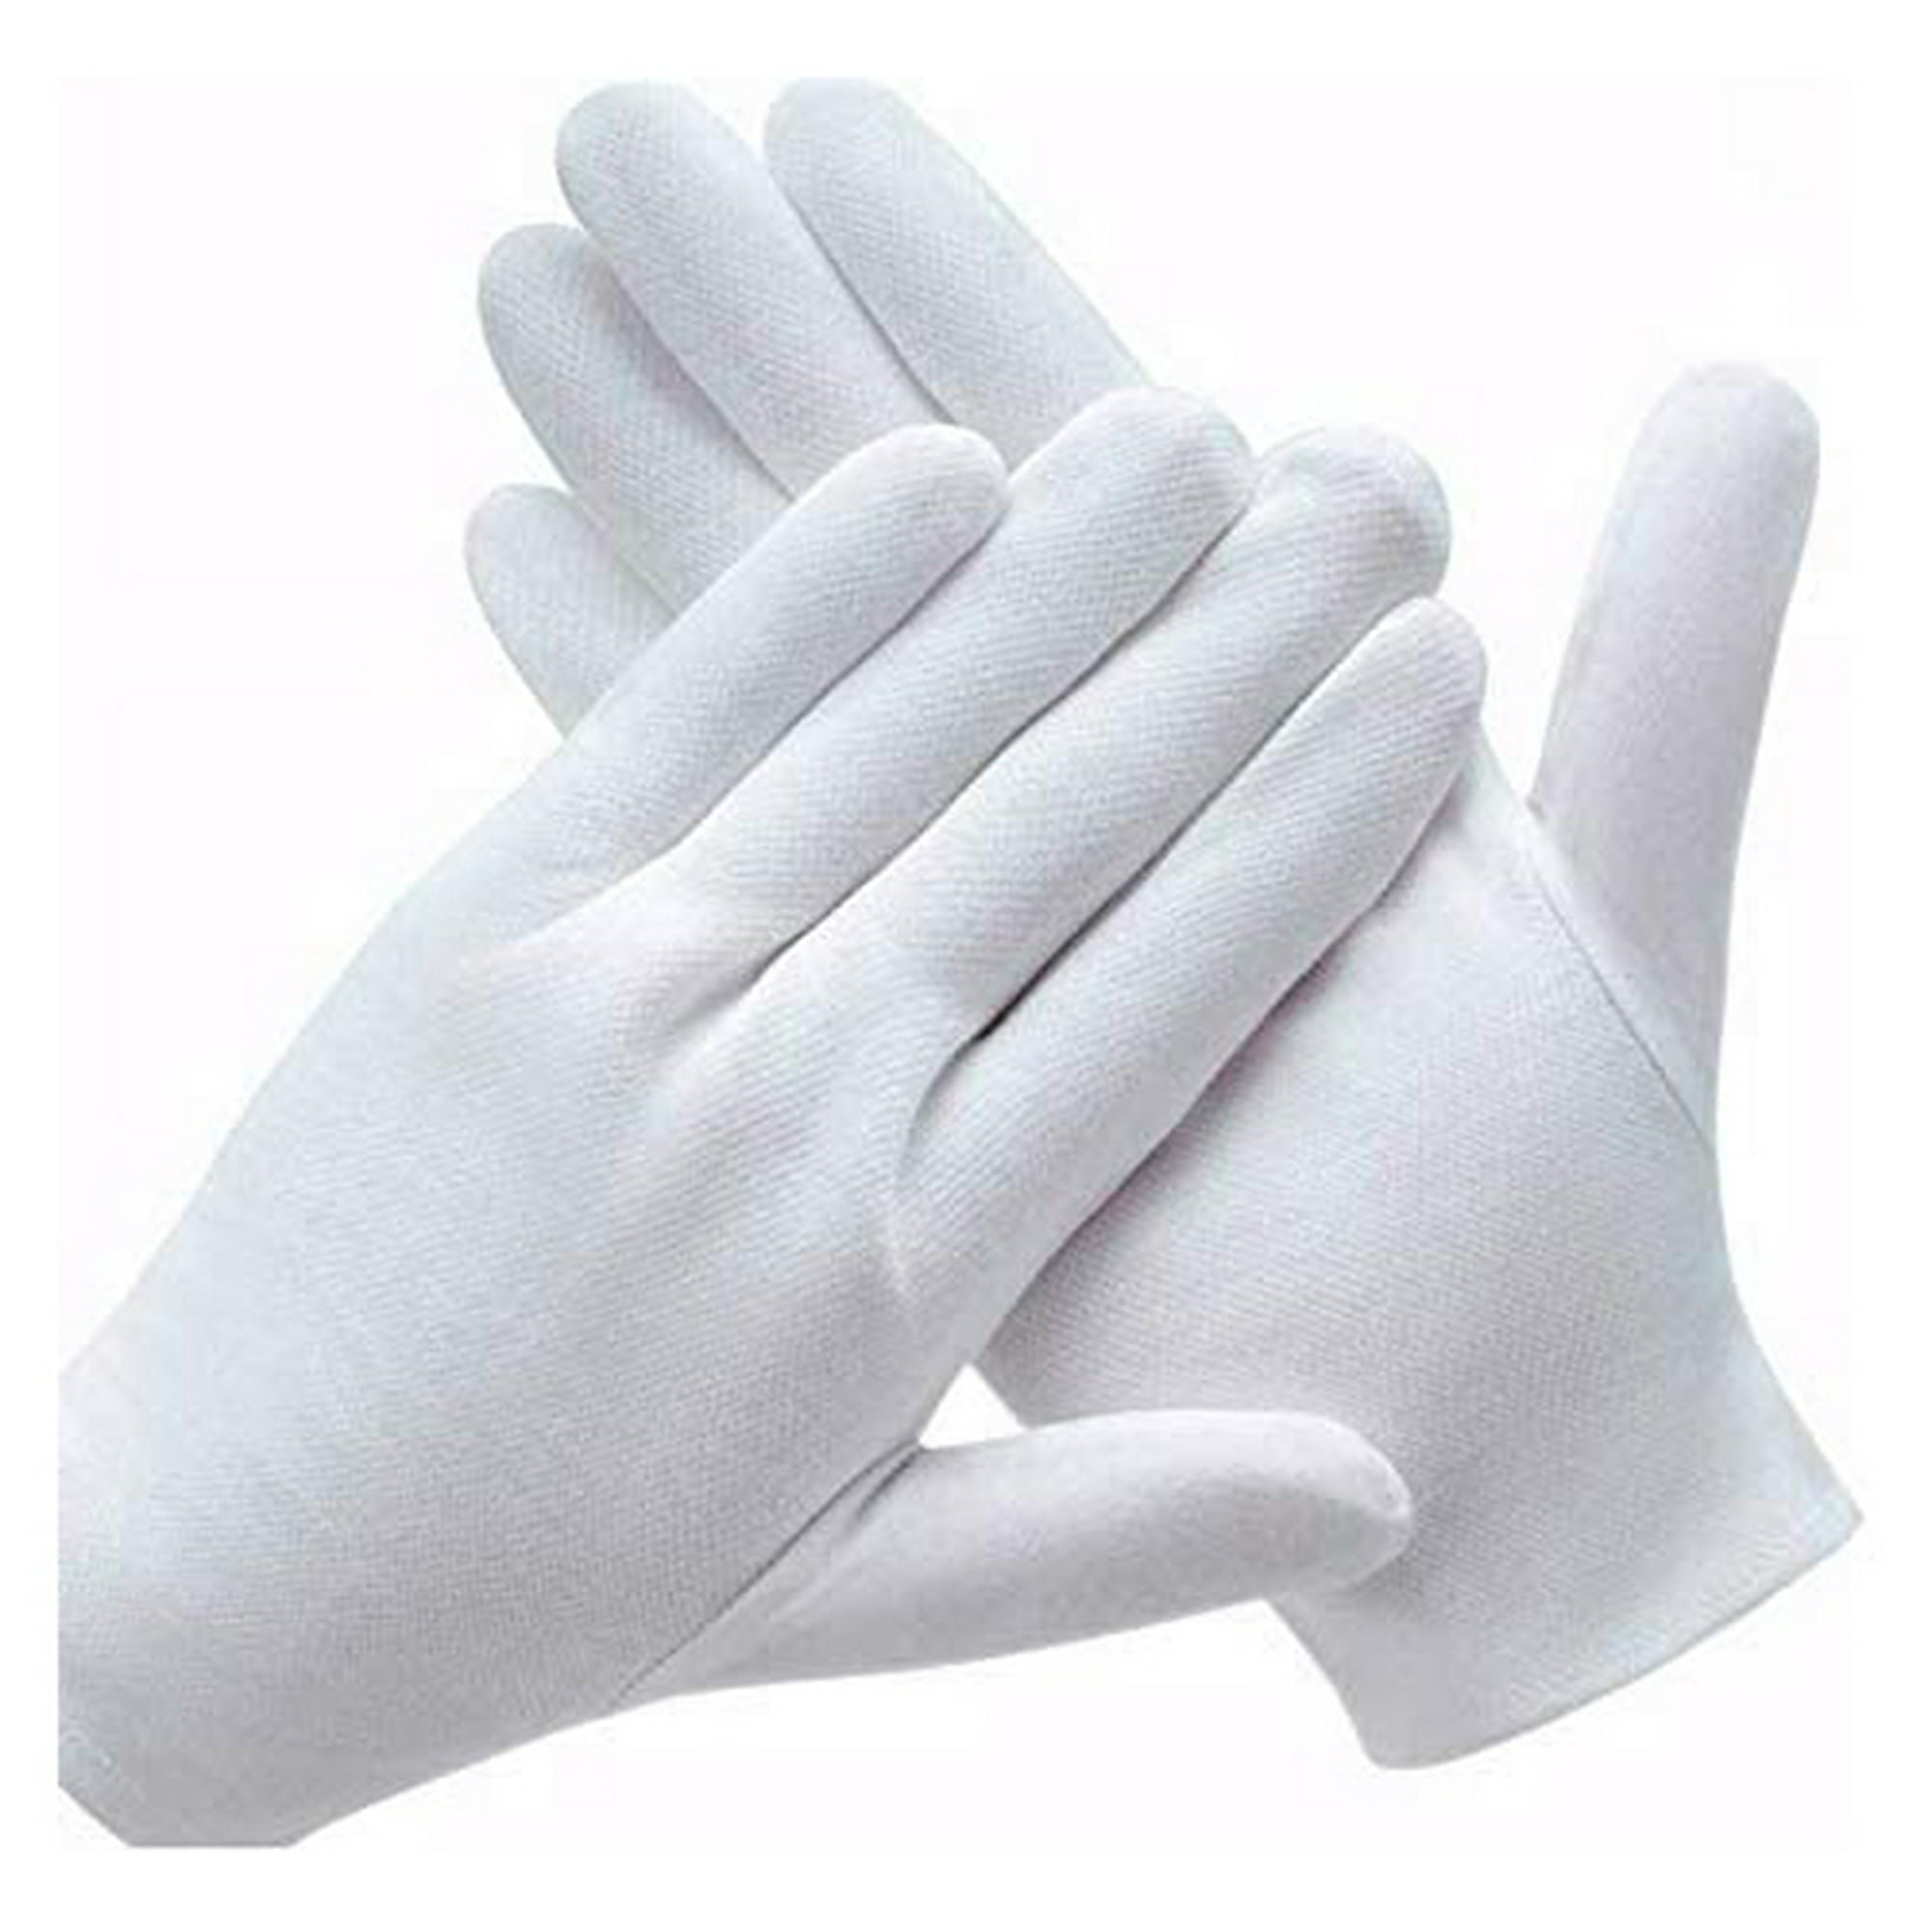 Ennegrecer clímax excitación 10 pares de guantes de algodón blanco guantes de algodón guantes de algodón  desechables para manos secas, eccema, belleza, monedas, joyas e inspección  de plata WD.WDQZL Producto electrónico | Walmart en línea